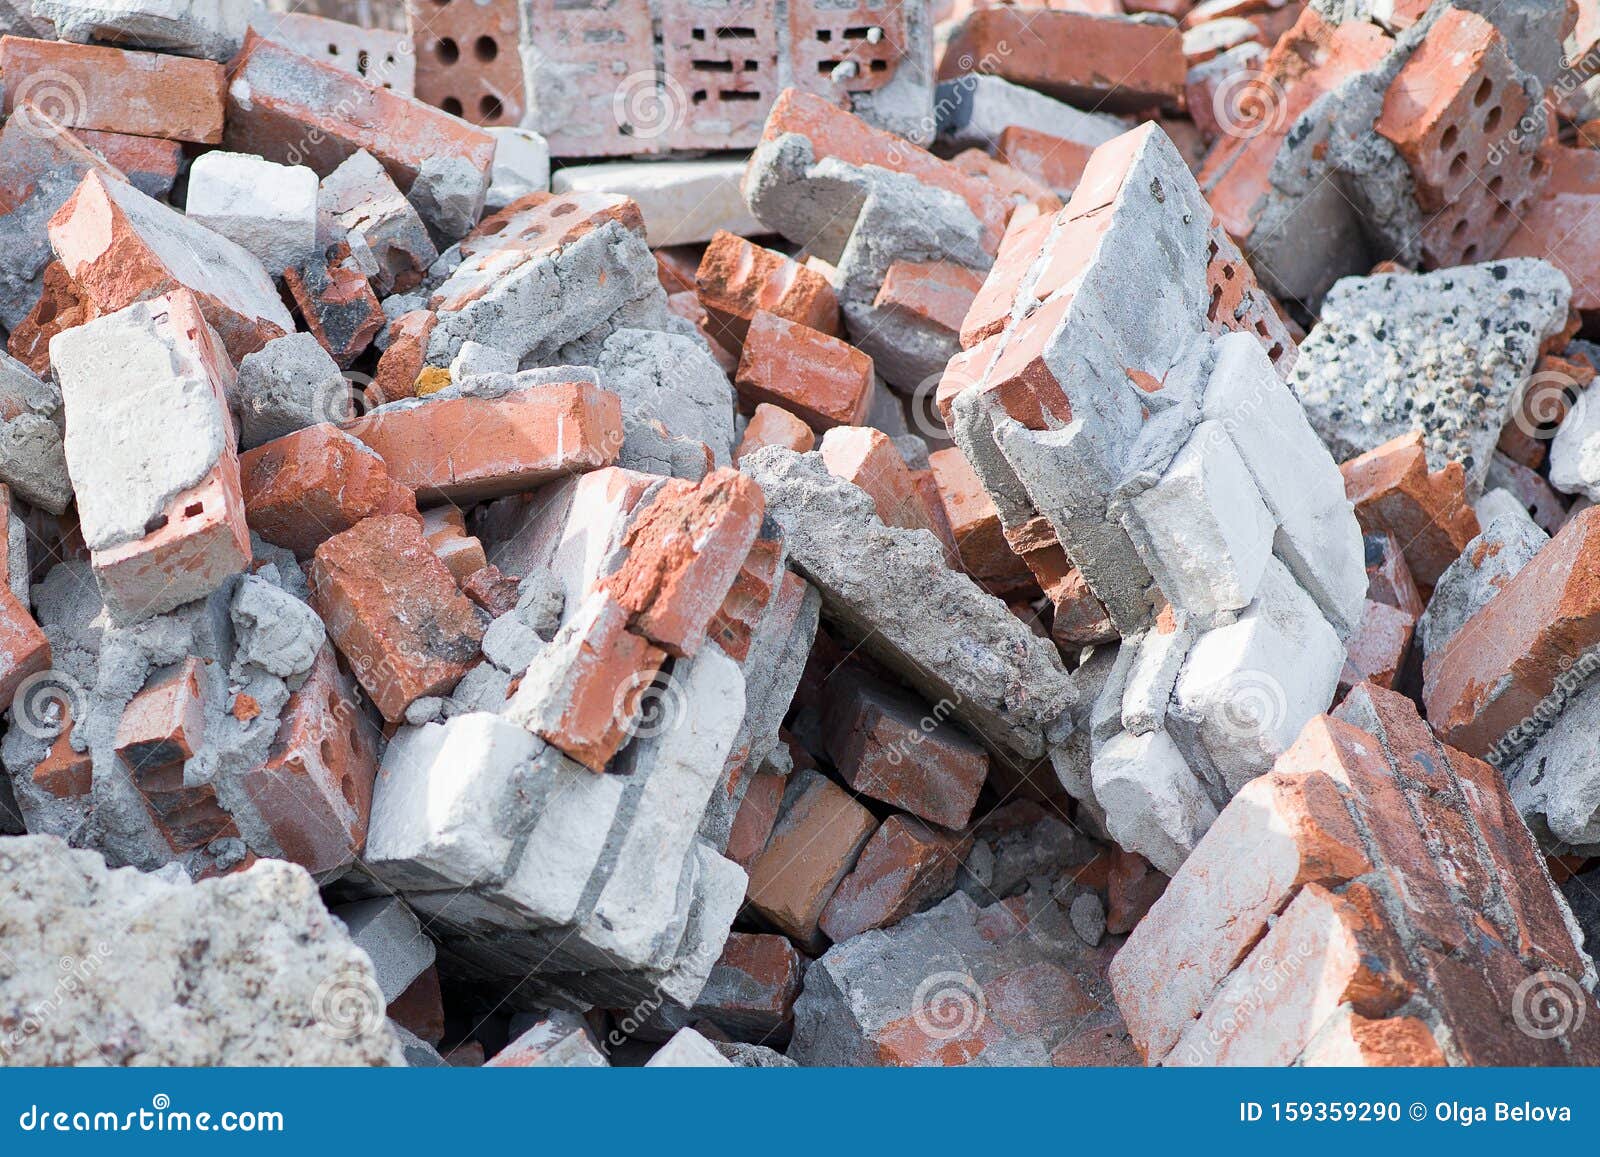 Construction Debris, Pieces Of Brick, Concrete Stock Photo - Image of ...